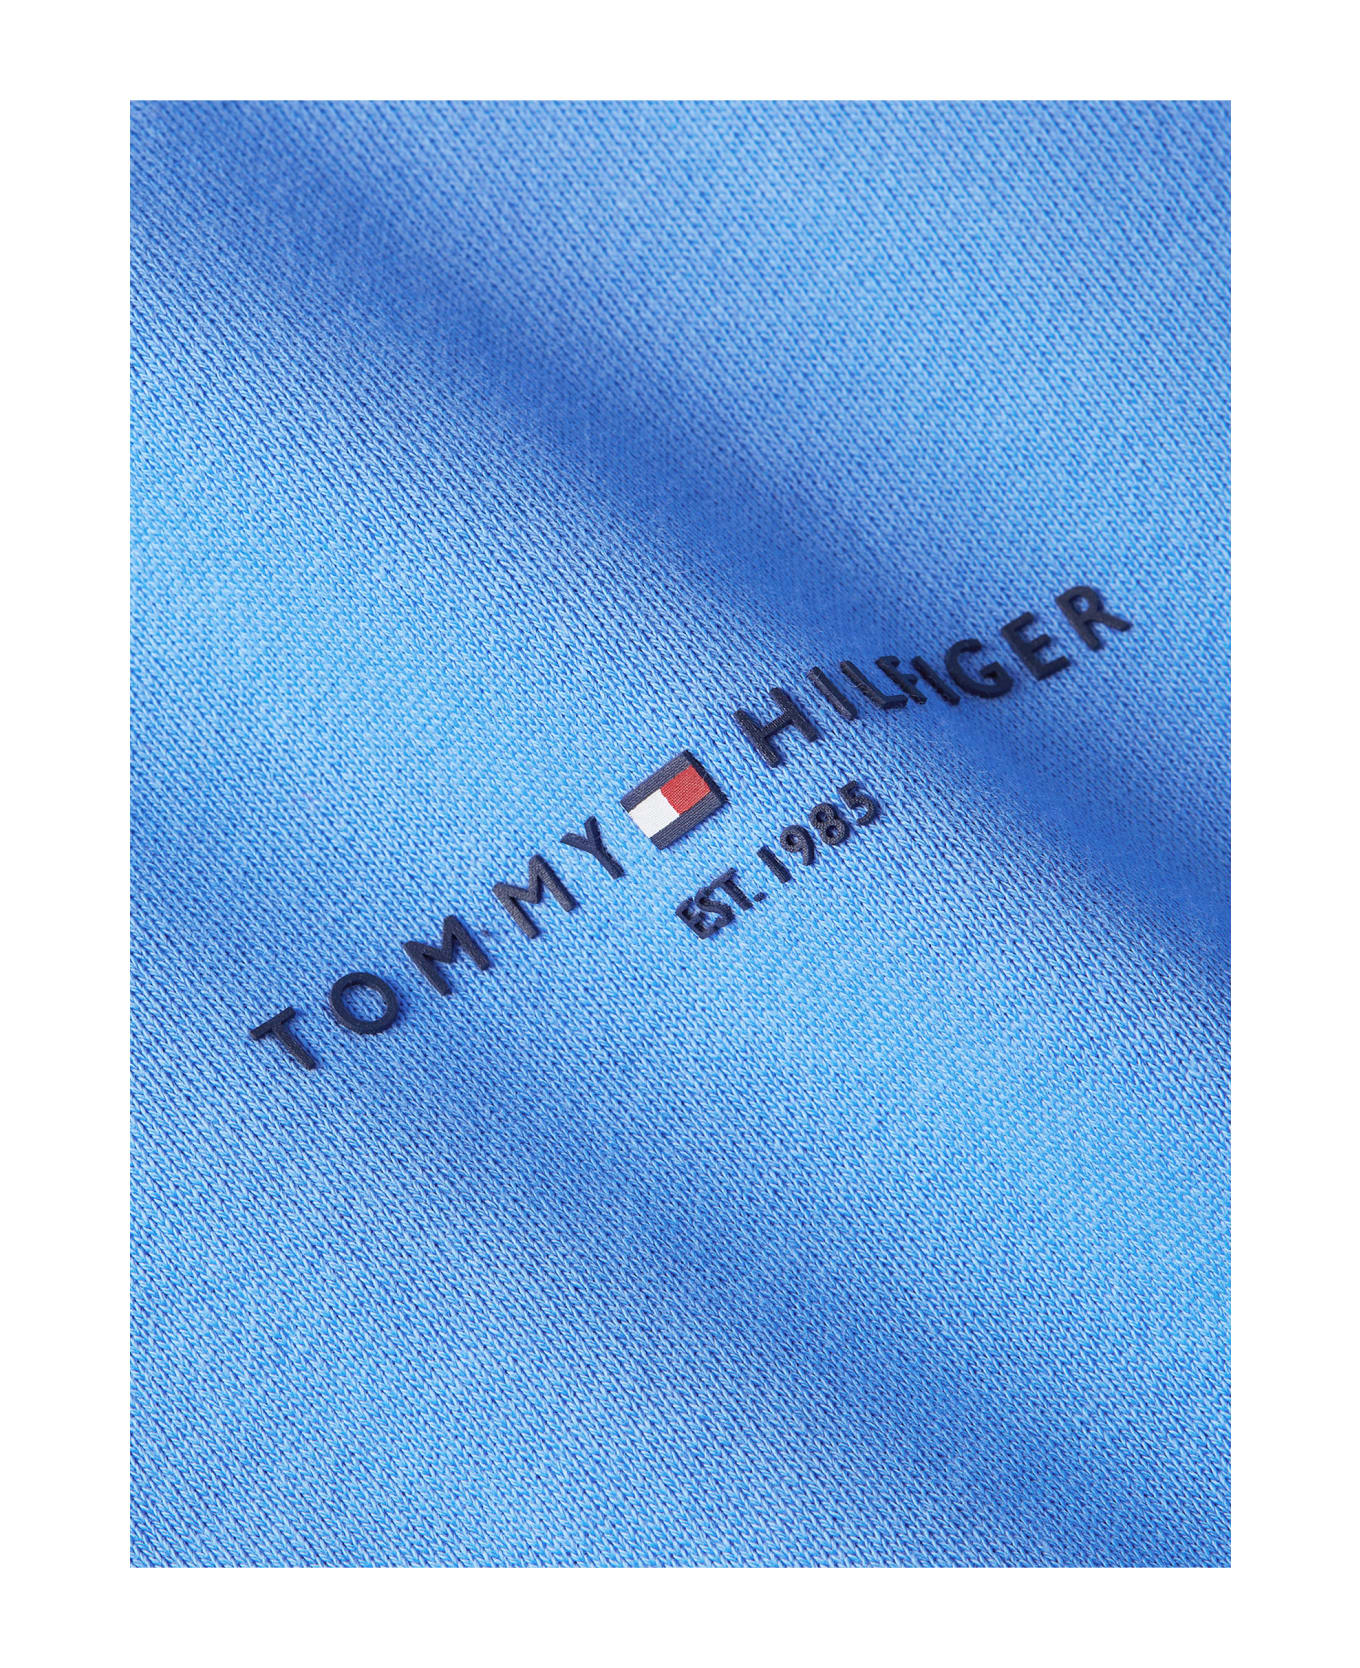 Tommy Hilfiger Crewneck Sweatshirt With Logo Writing - BLUE SPELL